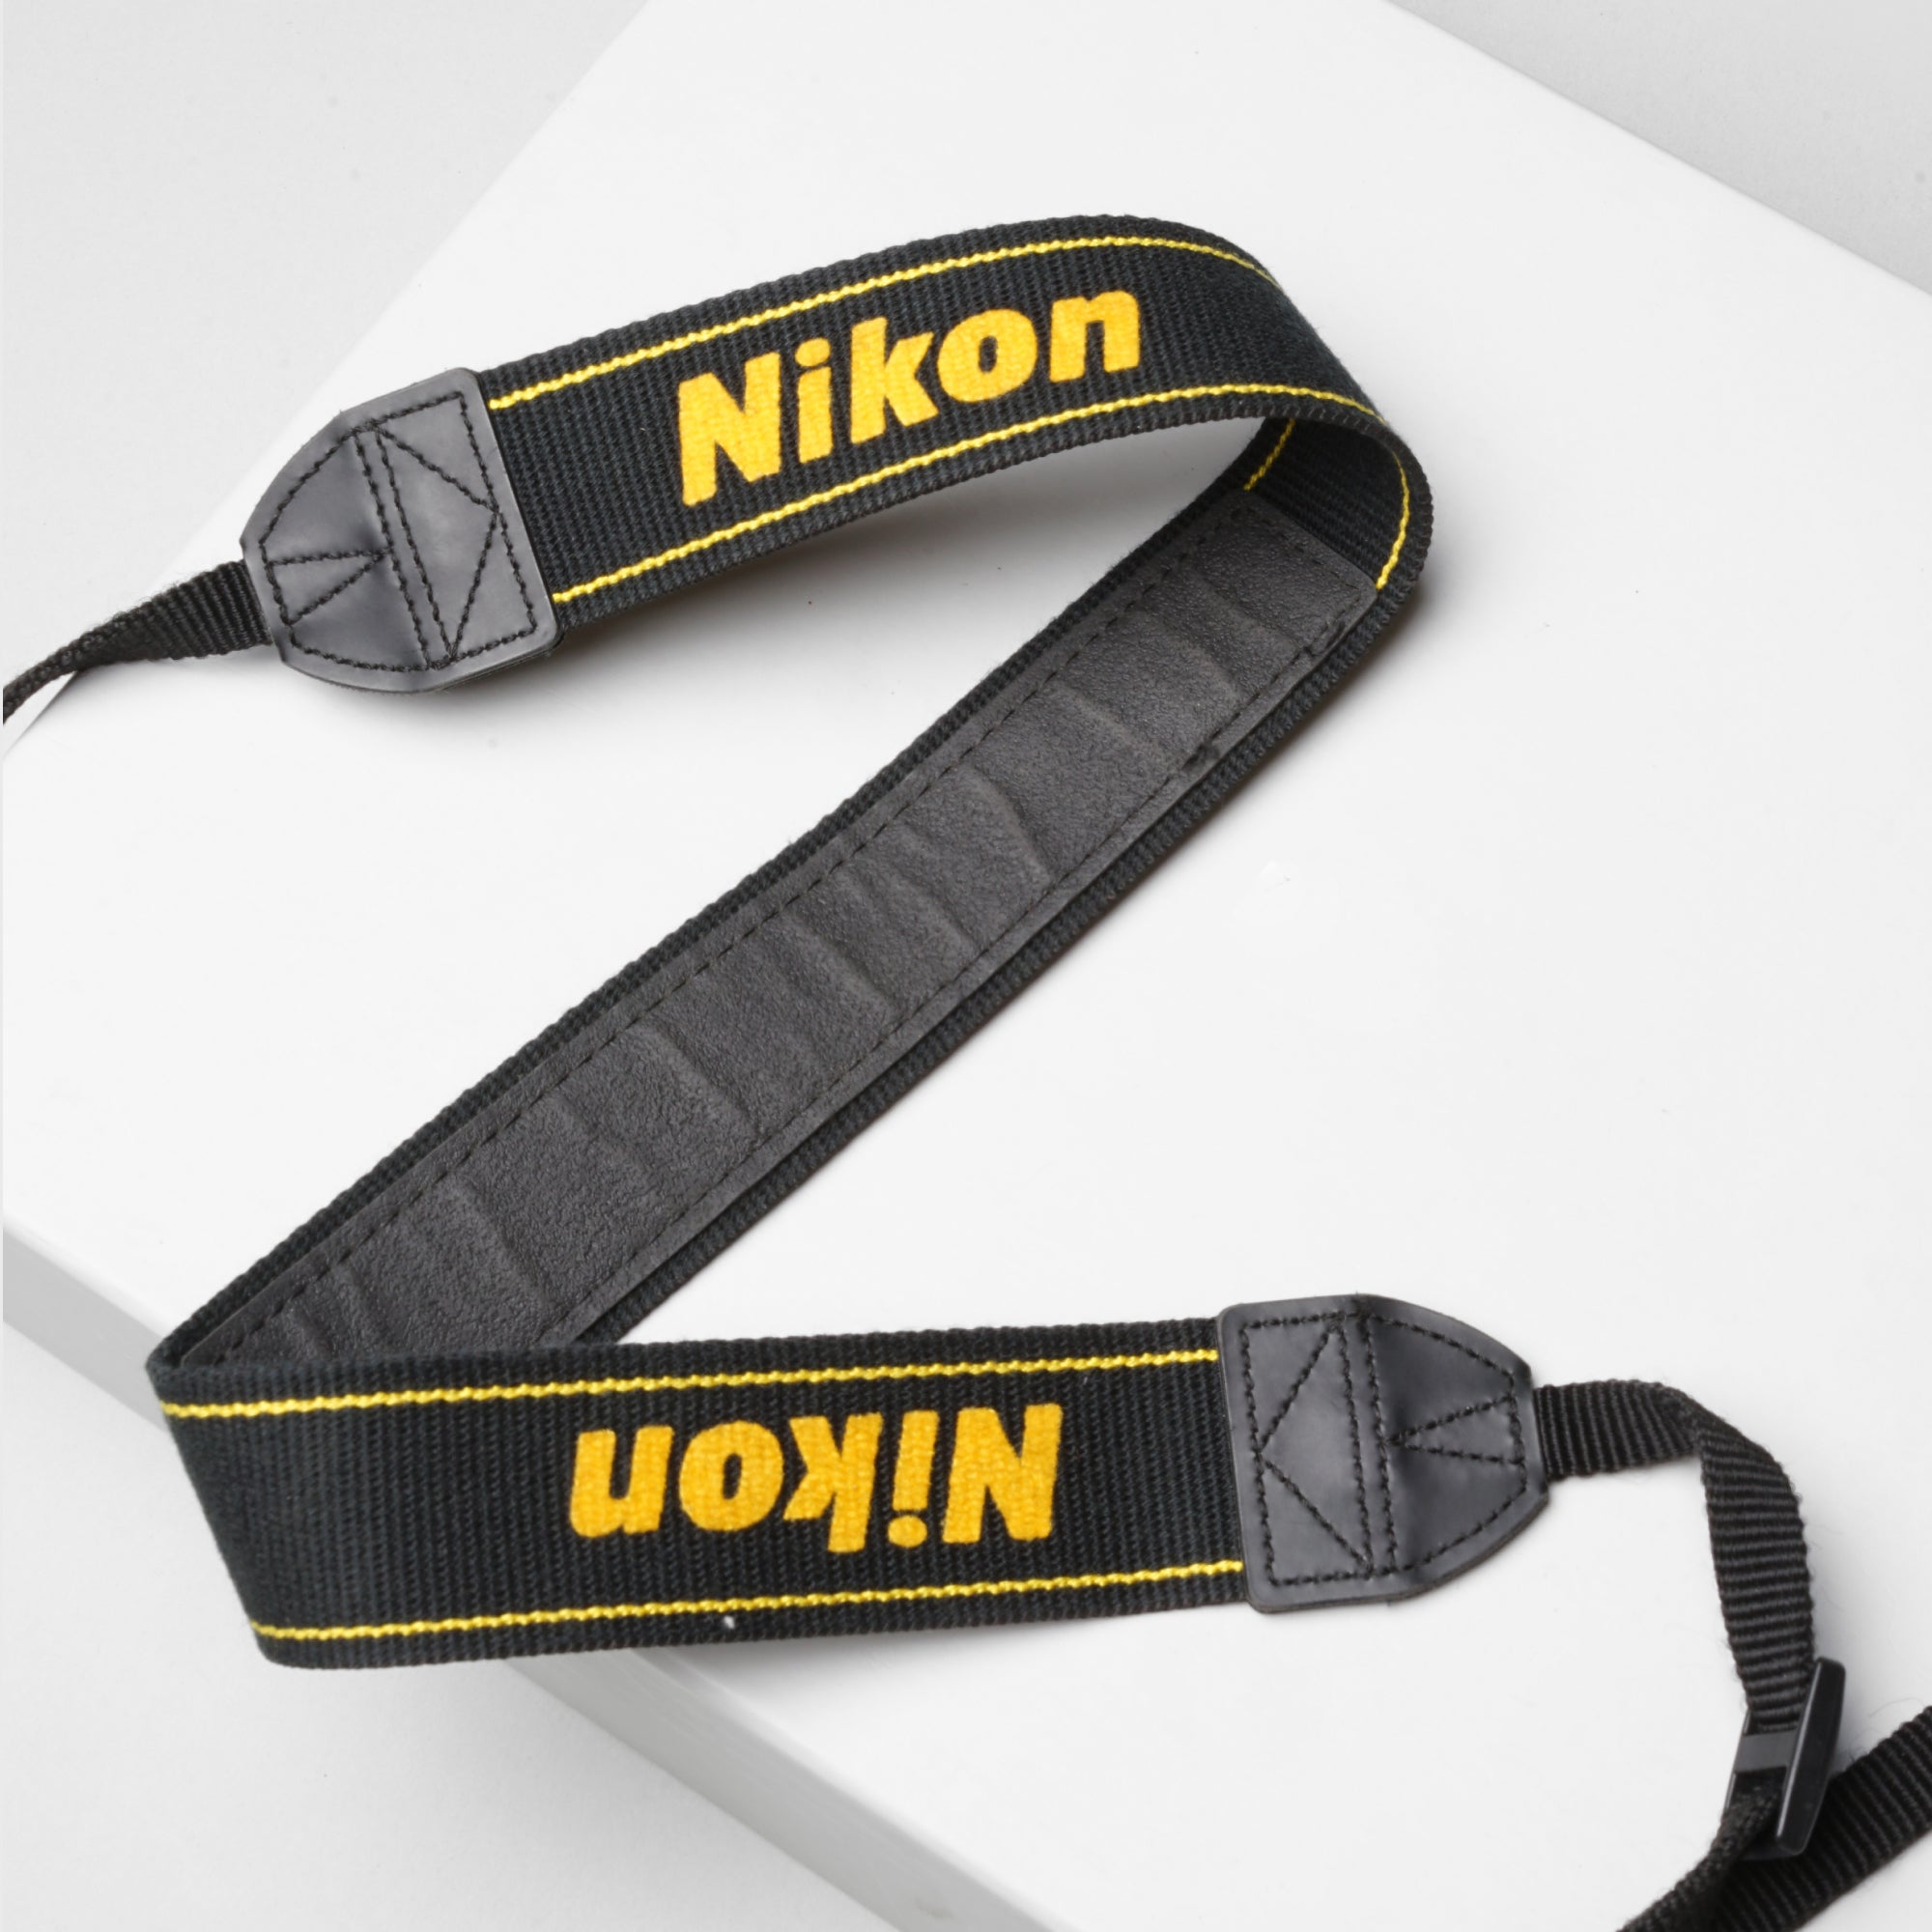 Buy Nikon original strap black now at Analogue Amsterdam